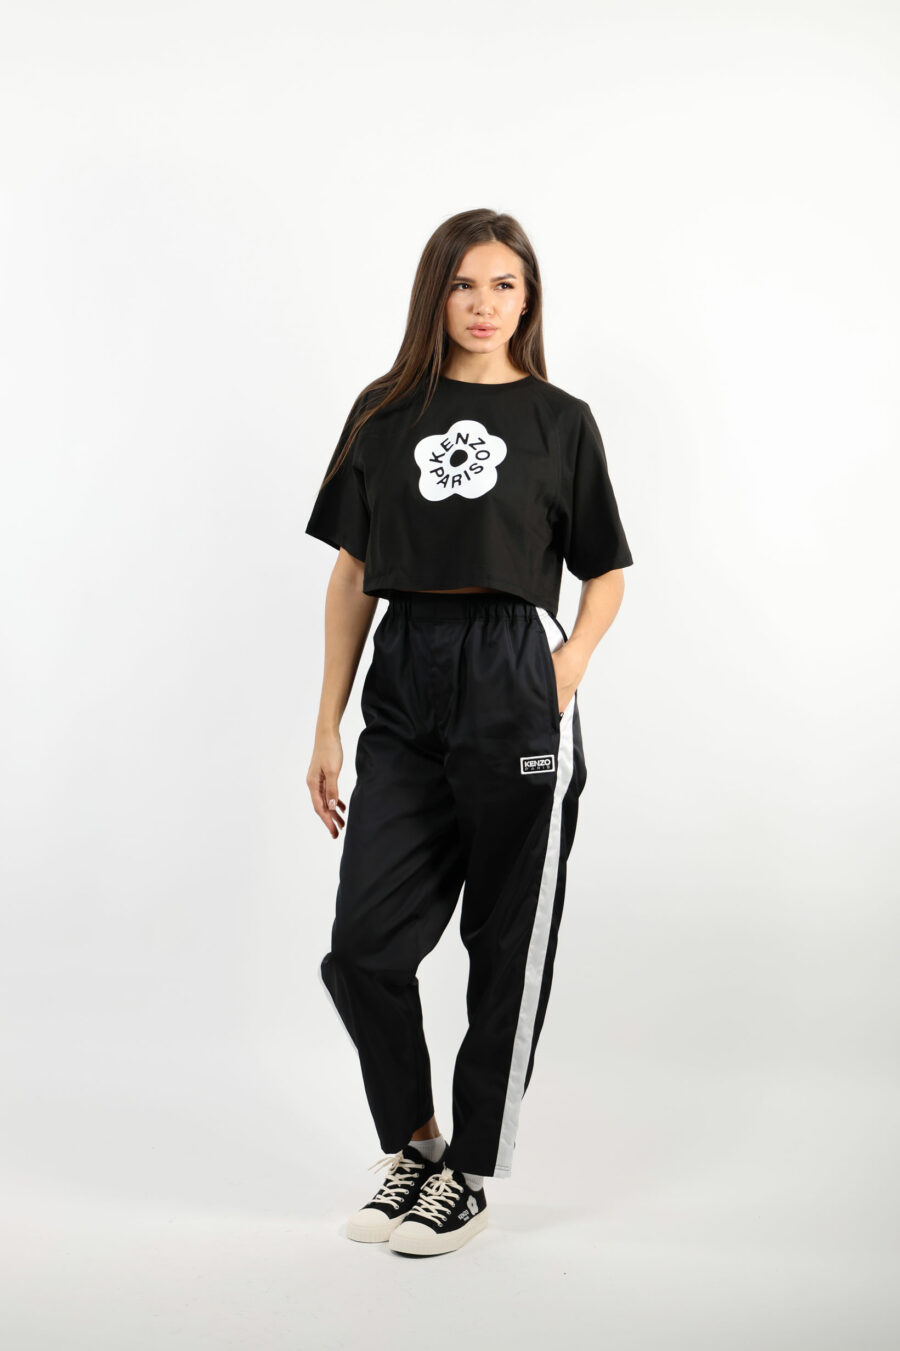 Schwarzes T-Shirt mit schwarzem "boke flower" Maxilogo - 109487